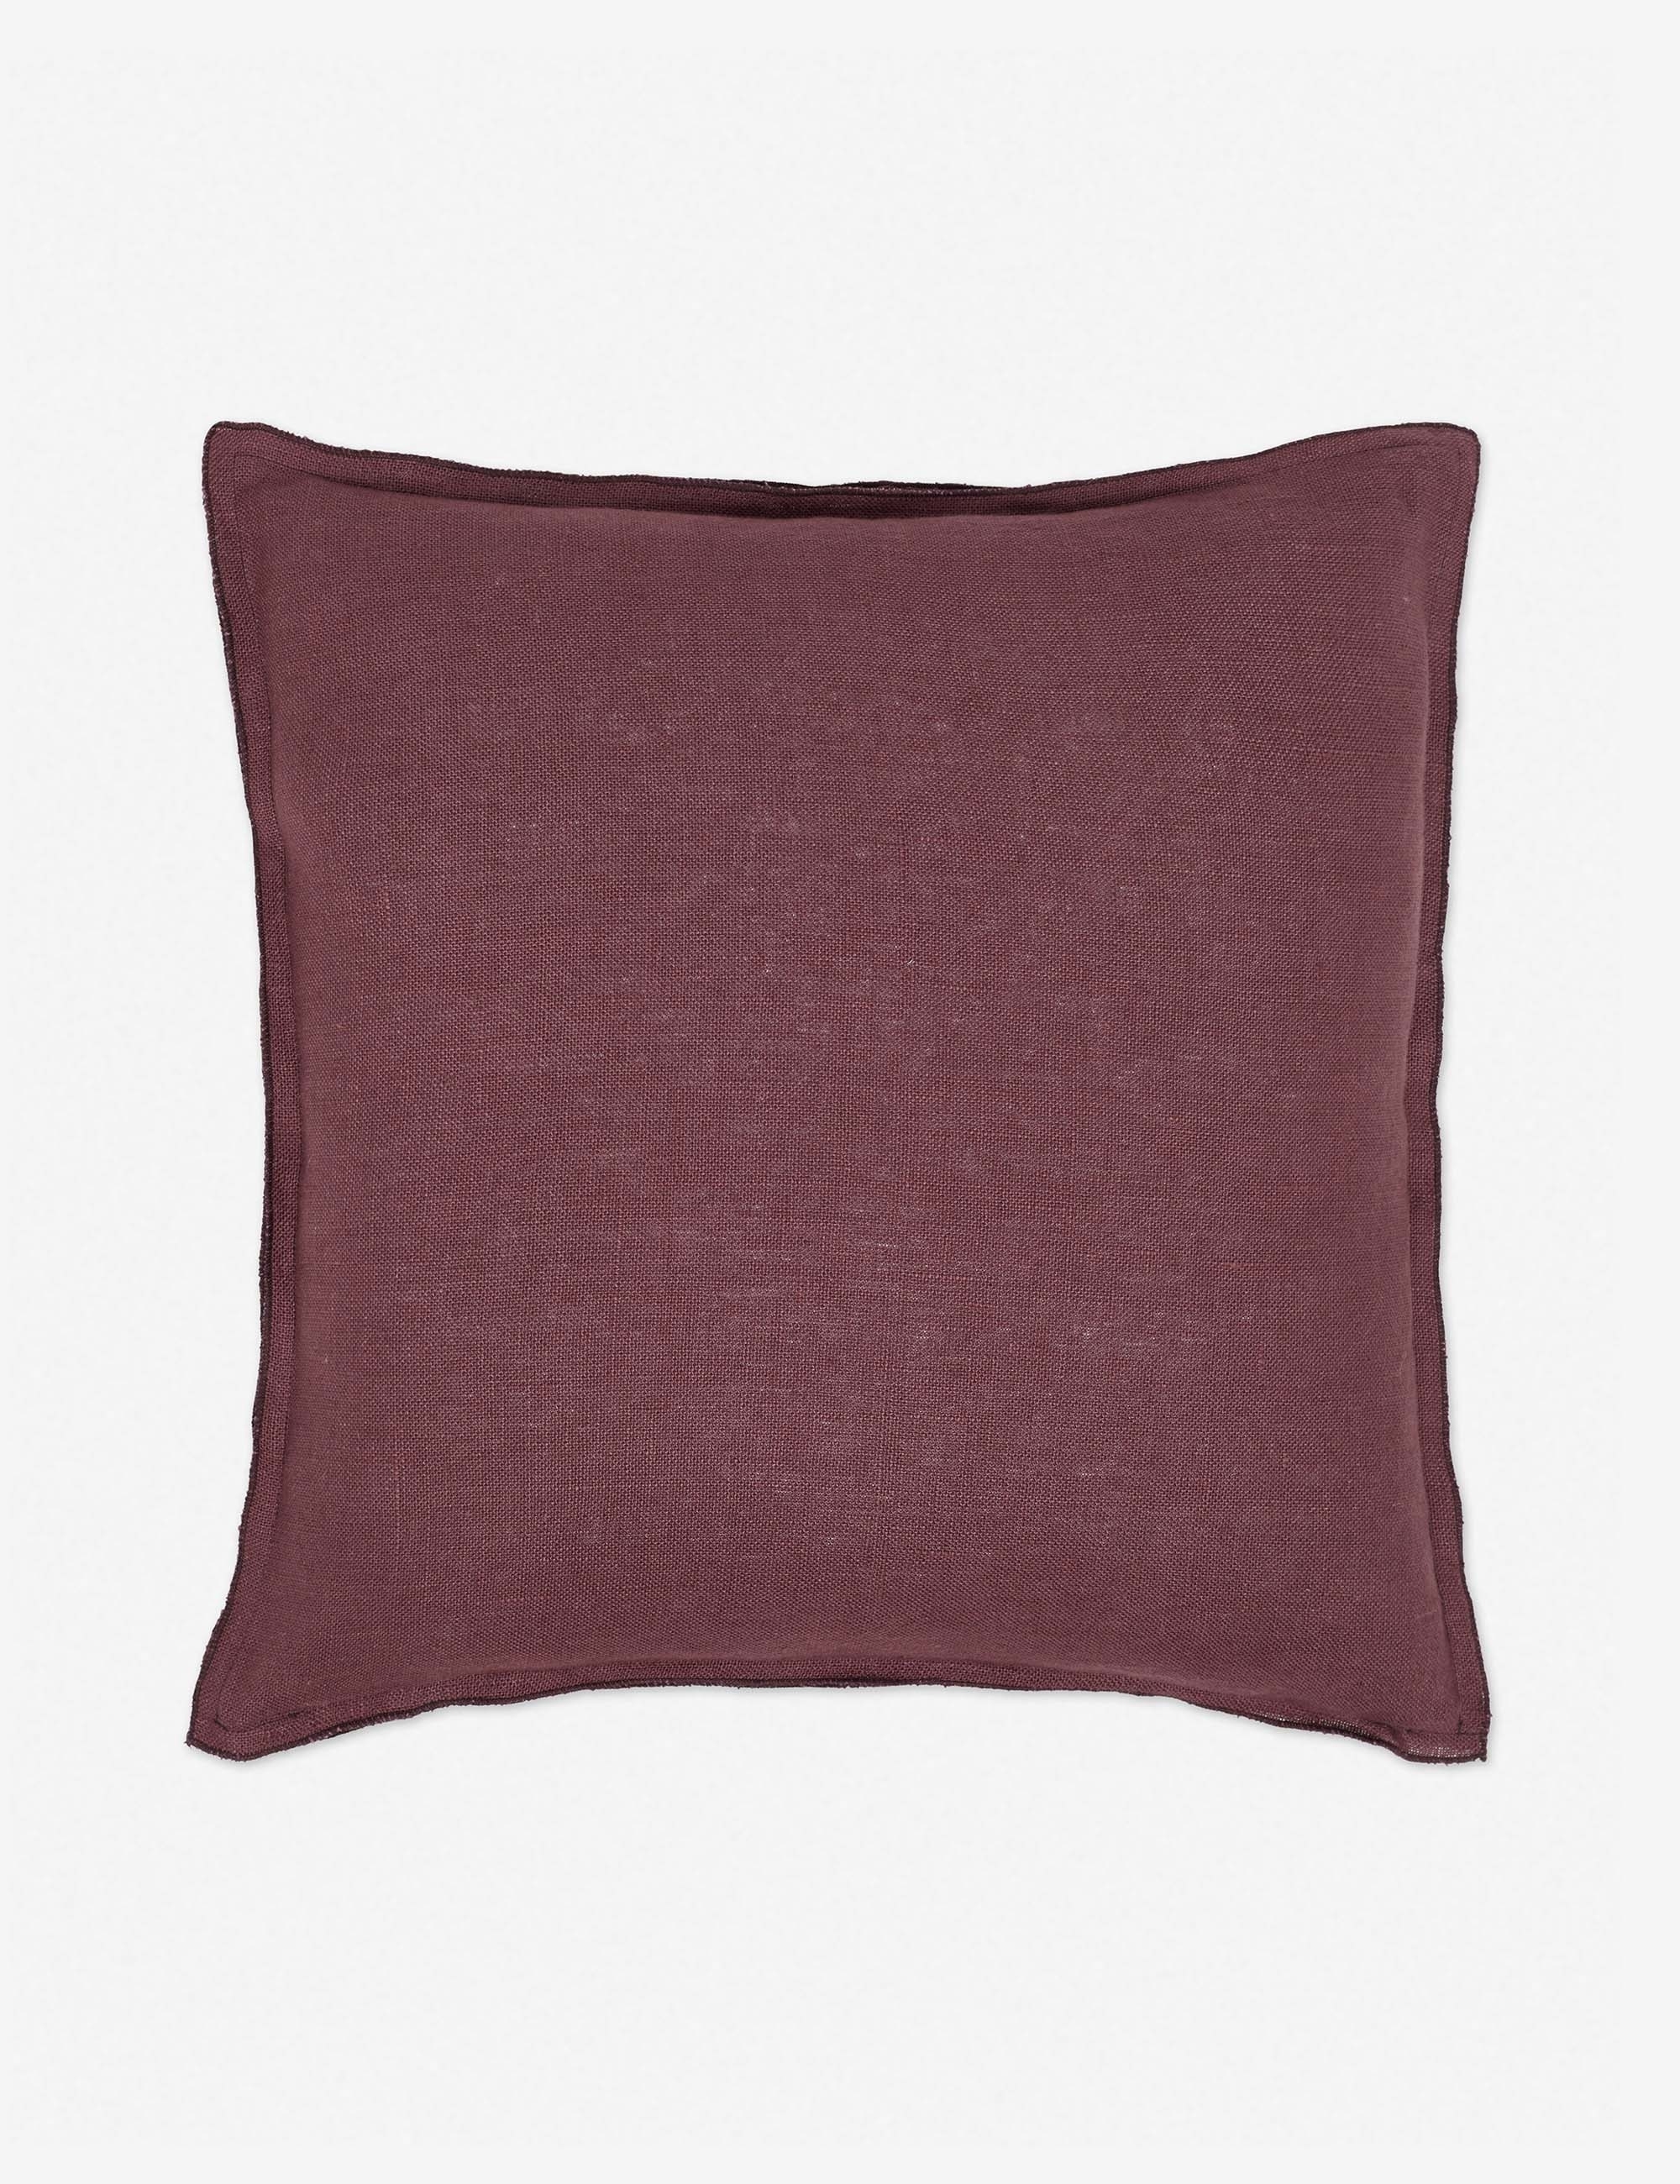 Arlo Linen Pillow, Aubergine - Image 0